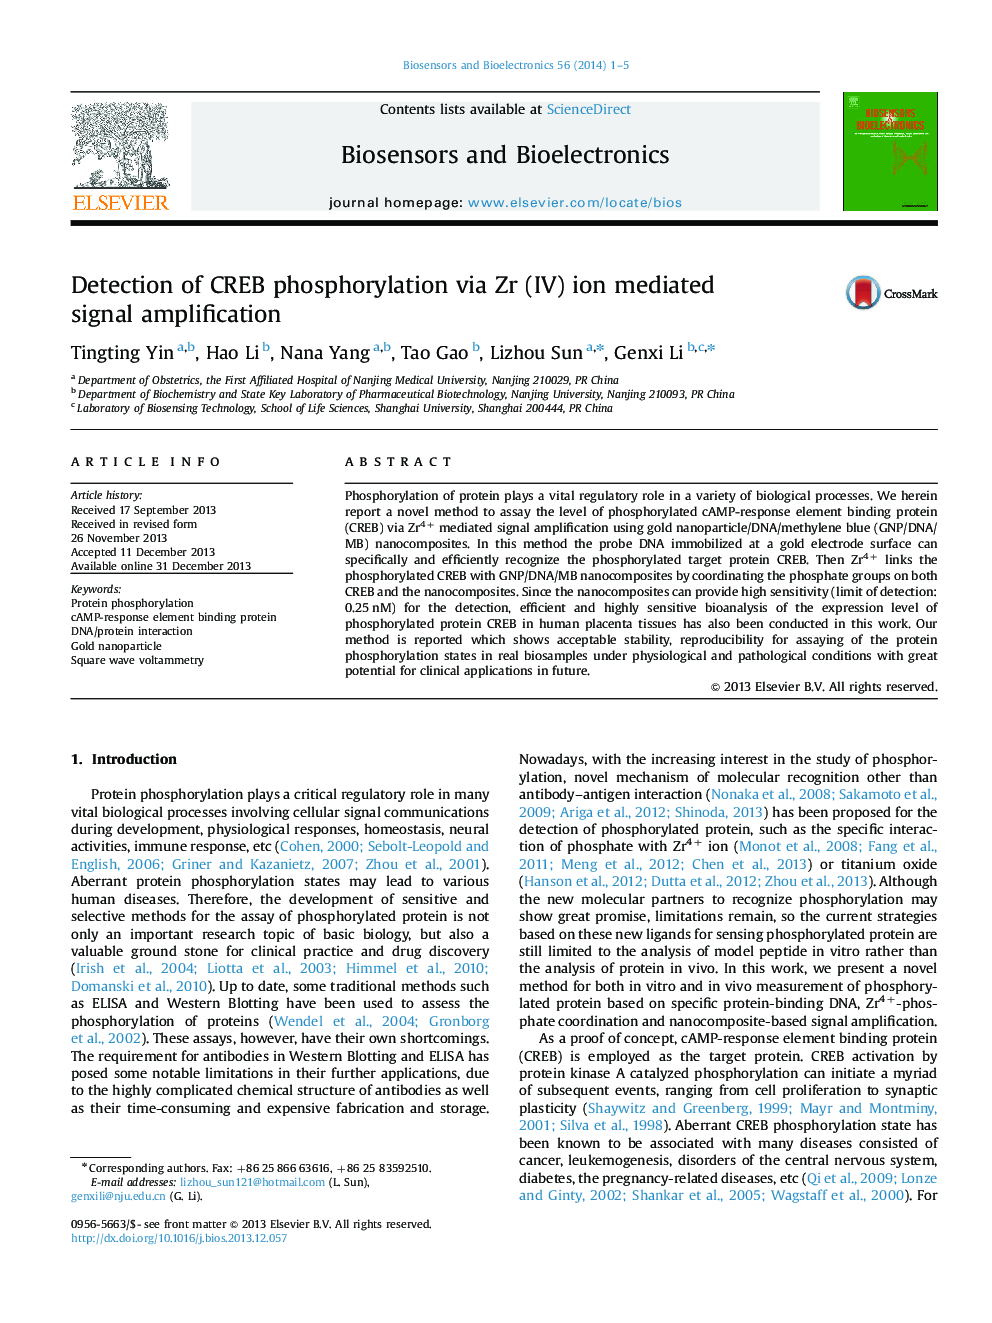 Detection of CREB phosphorylation via Zr (IV) ion mediated signal amplification